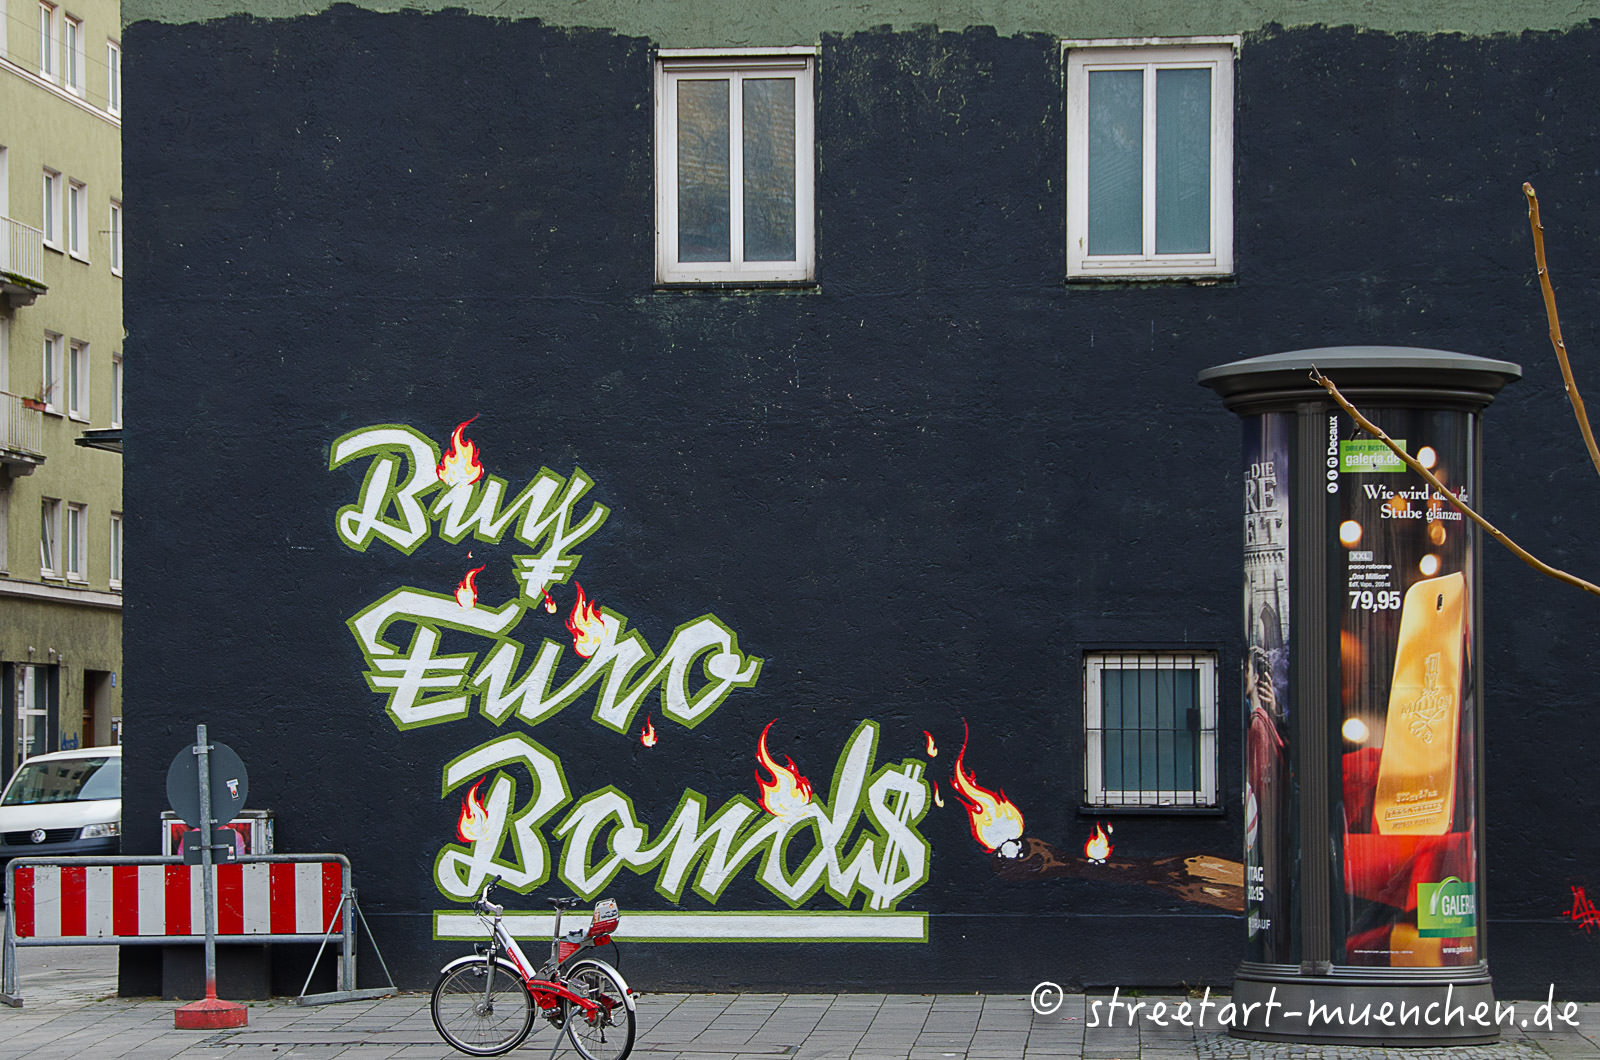 Buy Euro Bonds